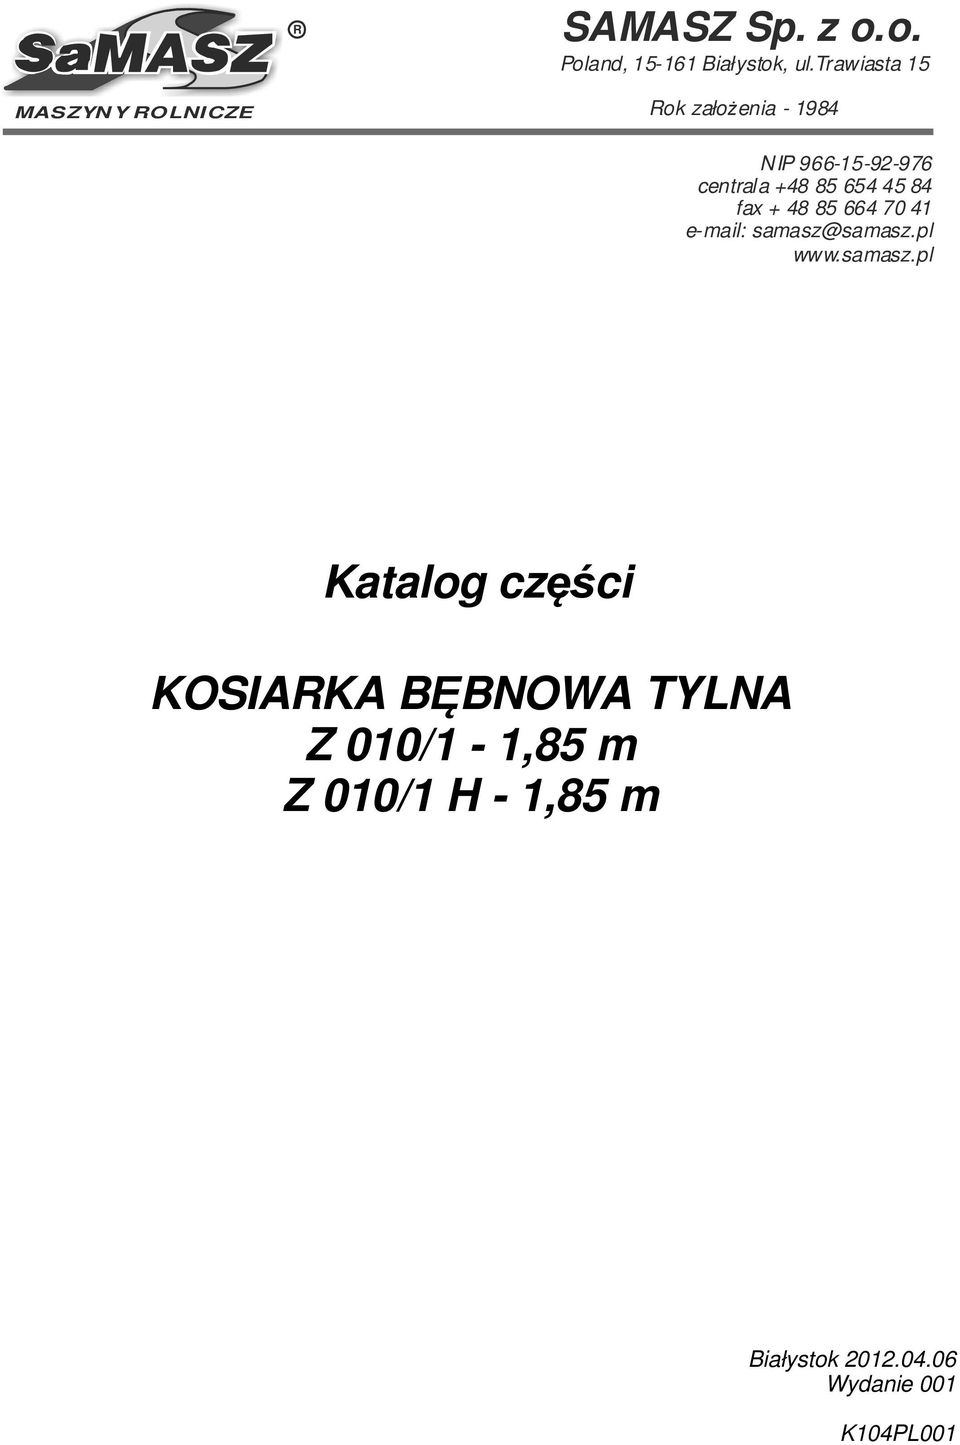 centrala +8 85 5 5 8 fax + 8 85 70 e-mail: samasz@samasz.pl www.